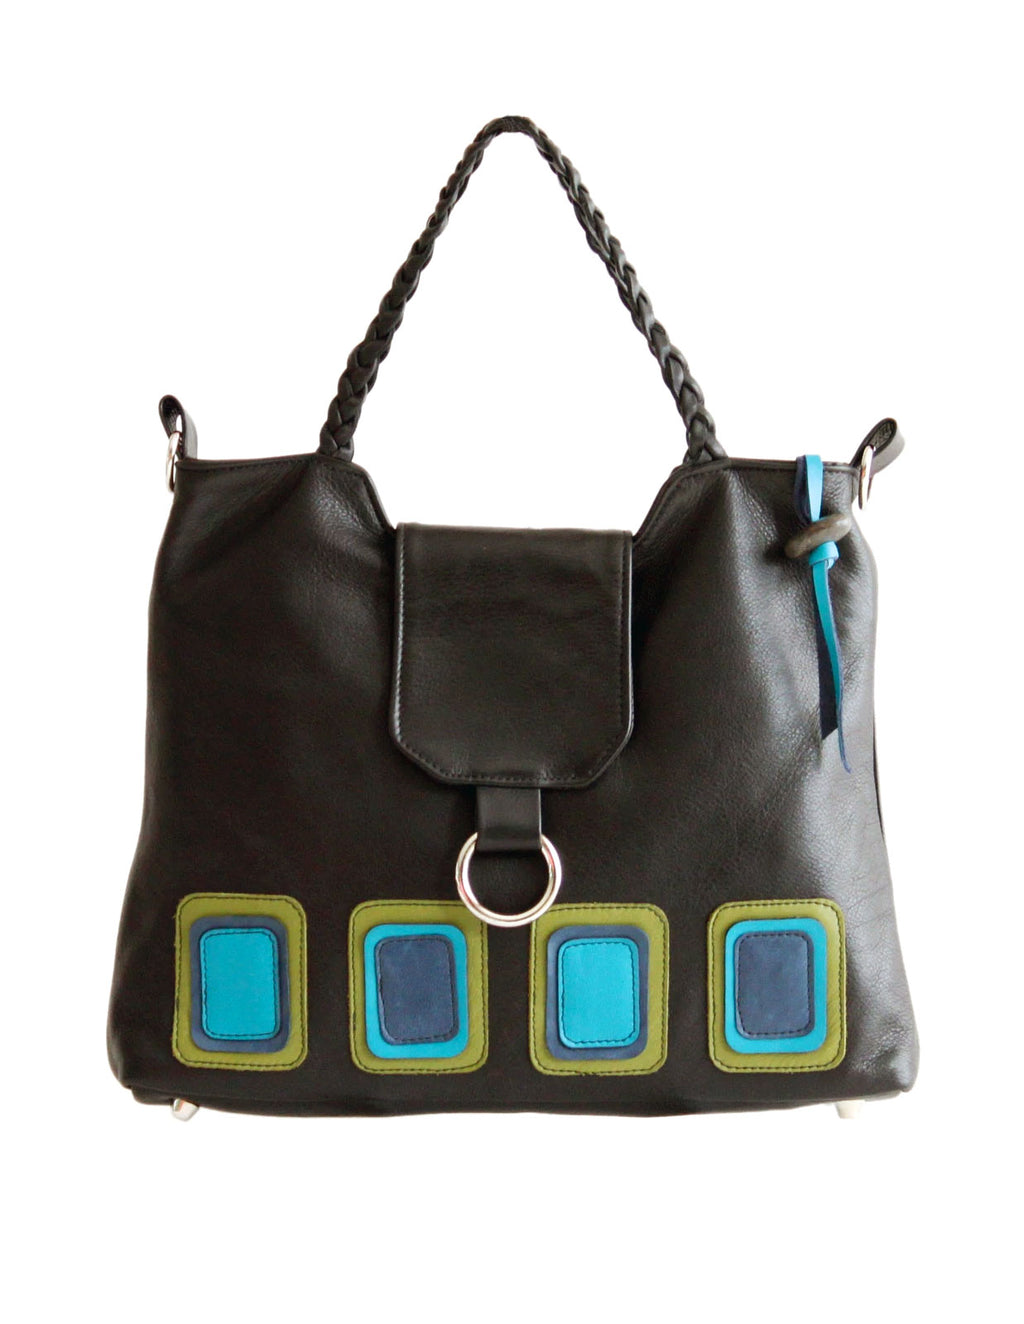 Op Art Handbag - Indian Summer's designer leather purses